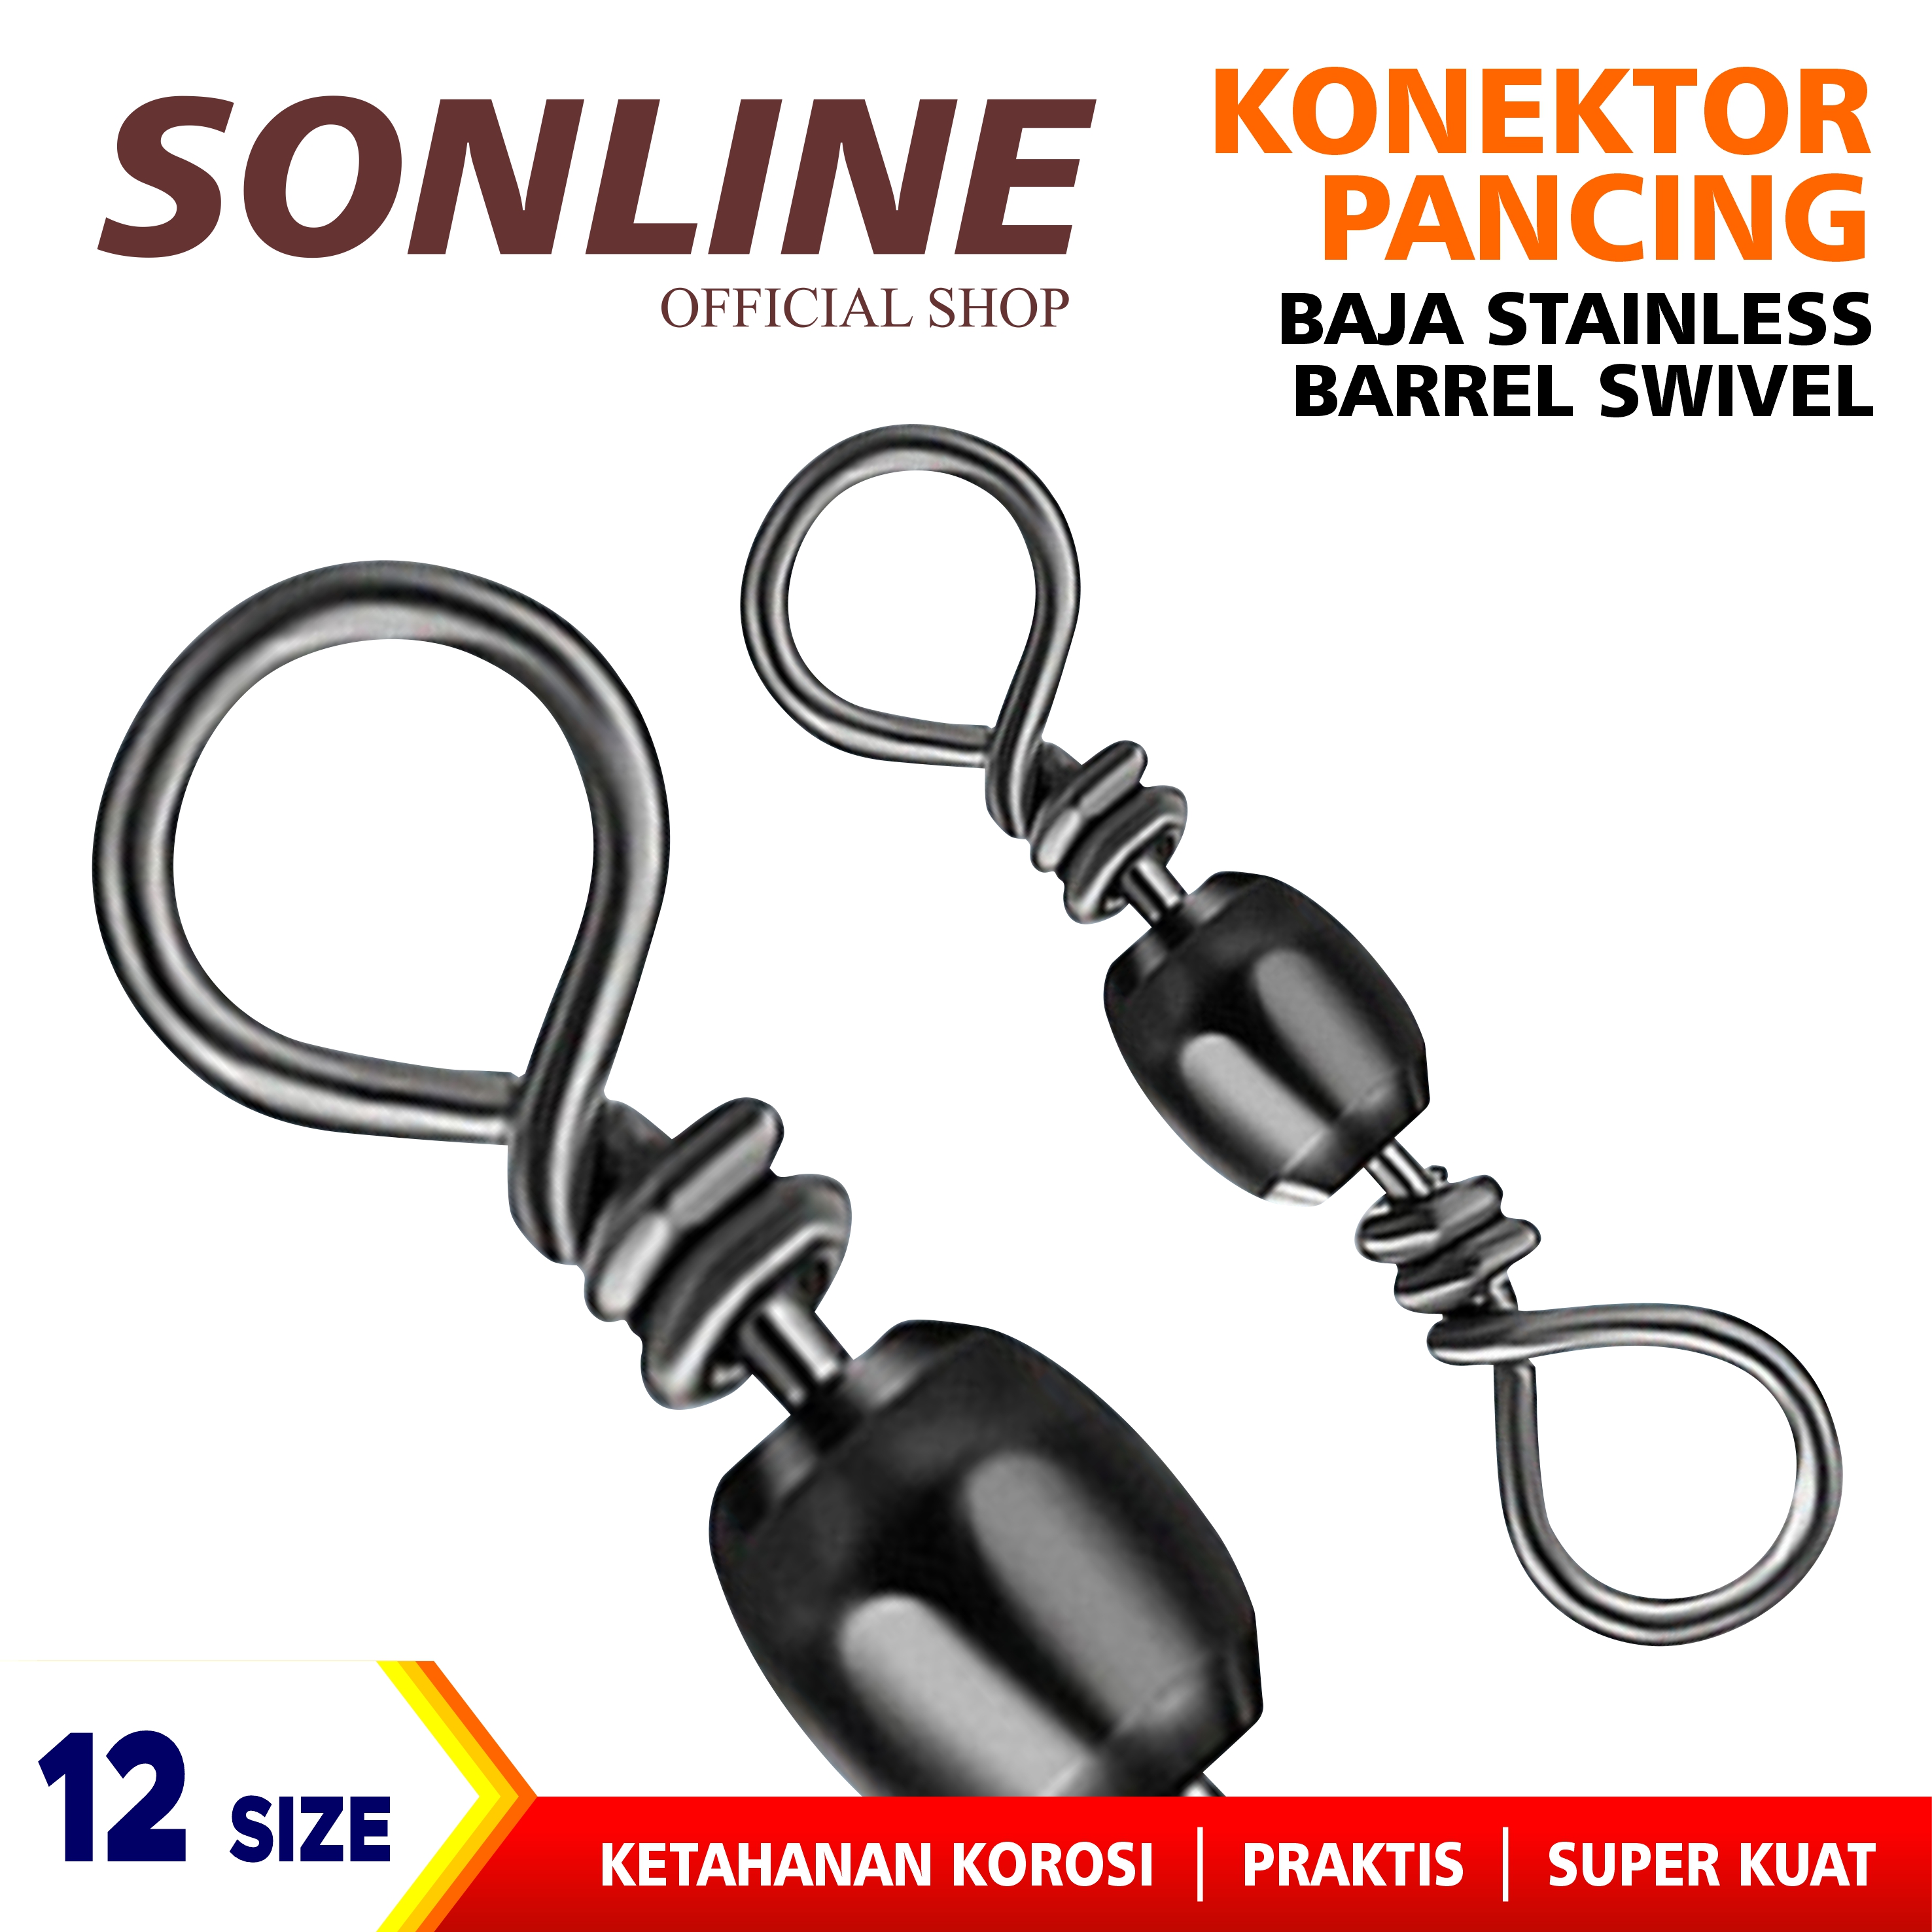 SONLINE ZXBZ Konektor Kili-kili Pancing Rolling Swivel Bahan Stainless  Steel Fishing Gear